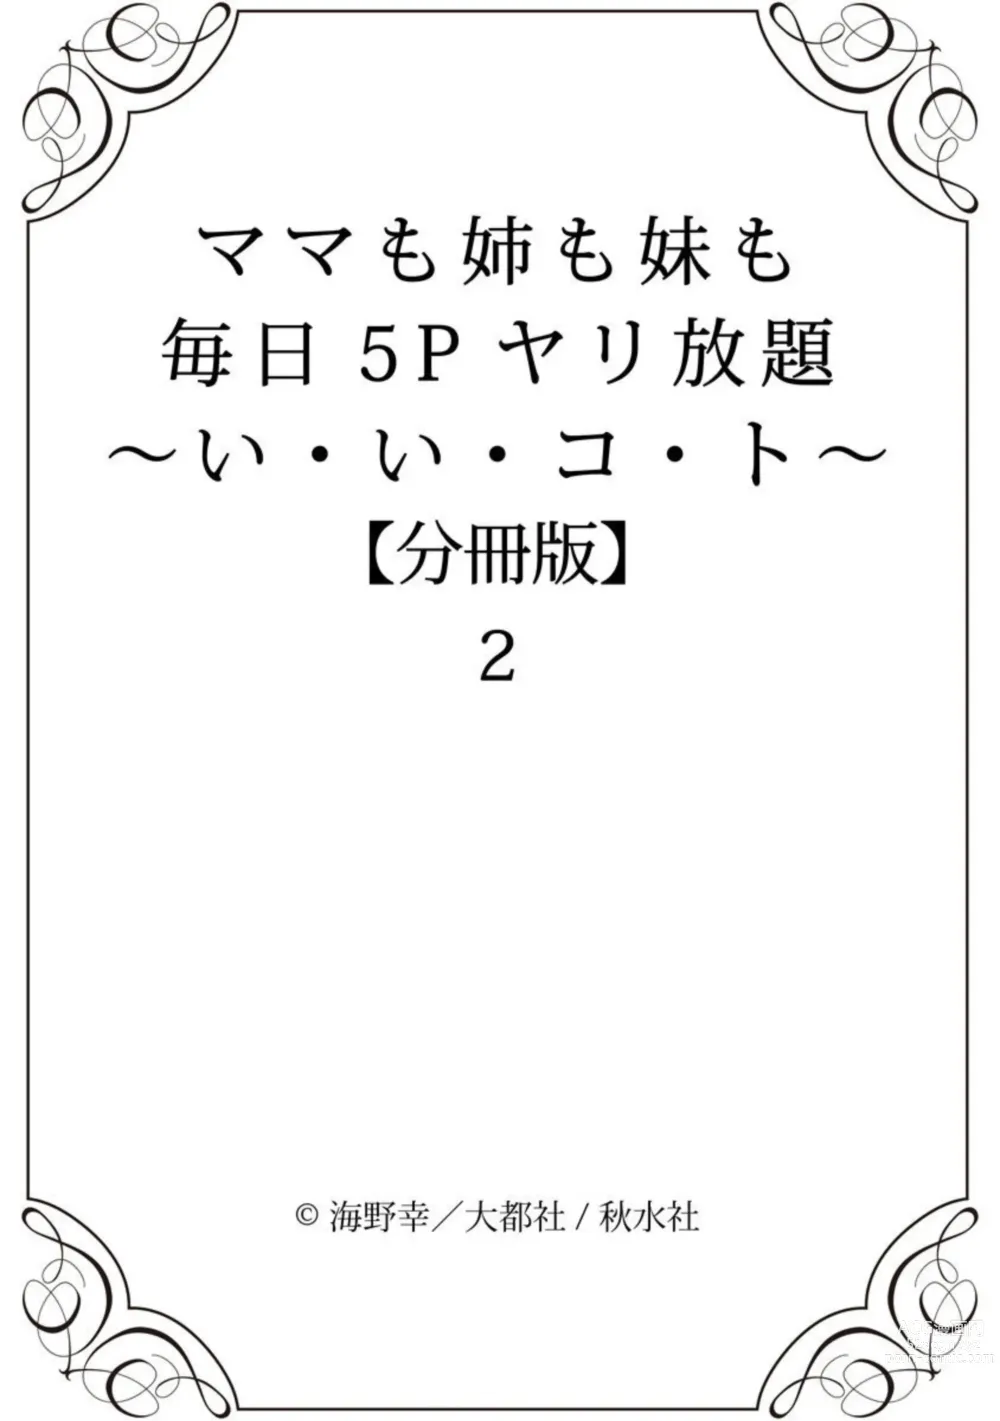 Page 45 of manga Mama mo Ane mo Imouto mo Mainichi 5 P Yarihoudai ~I i ko to~ [Bunsatsuban] 1-2